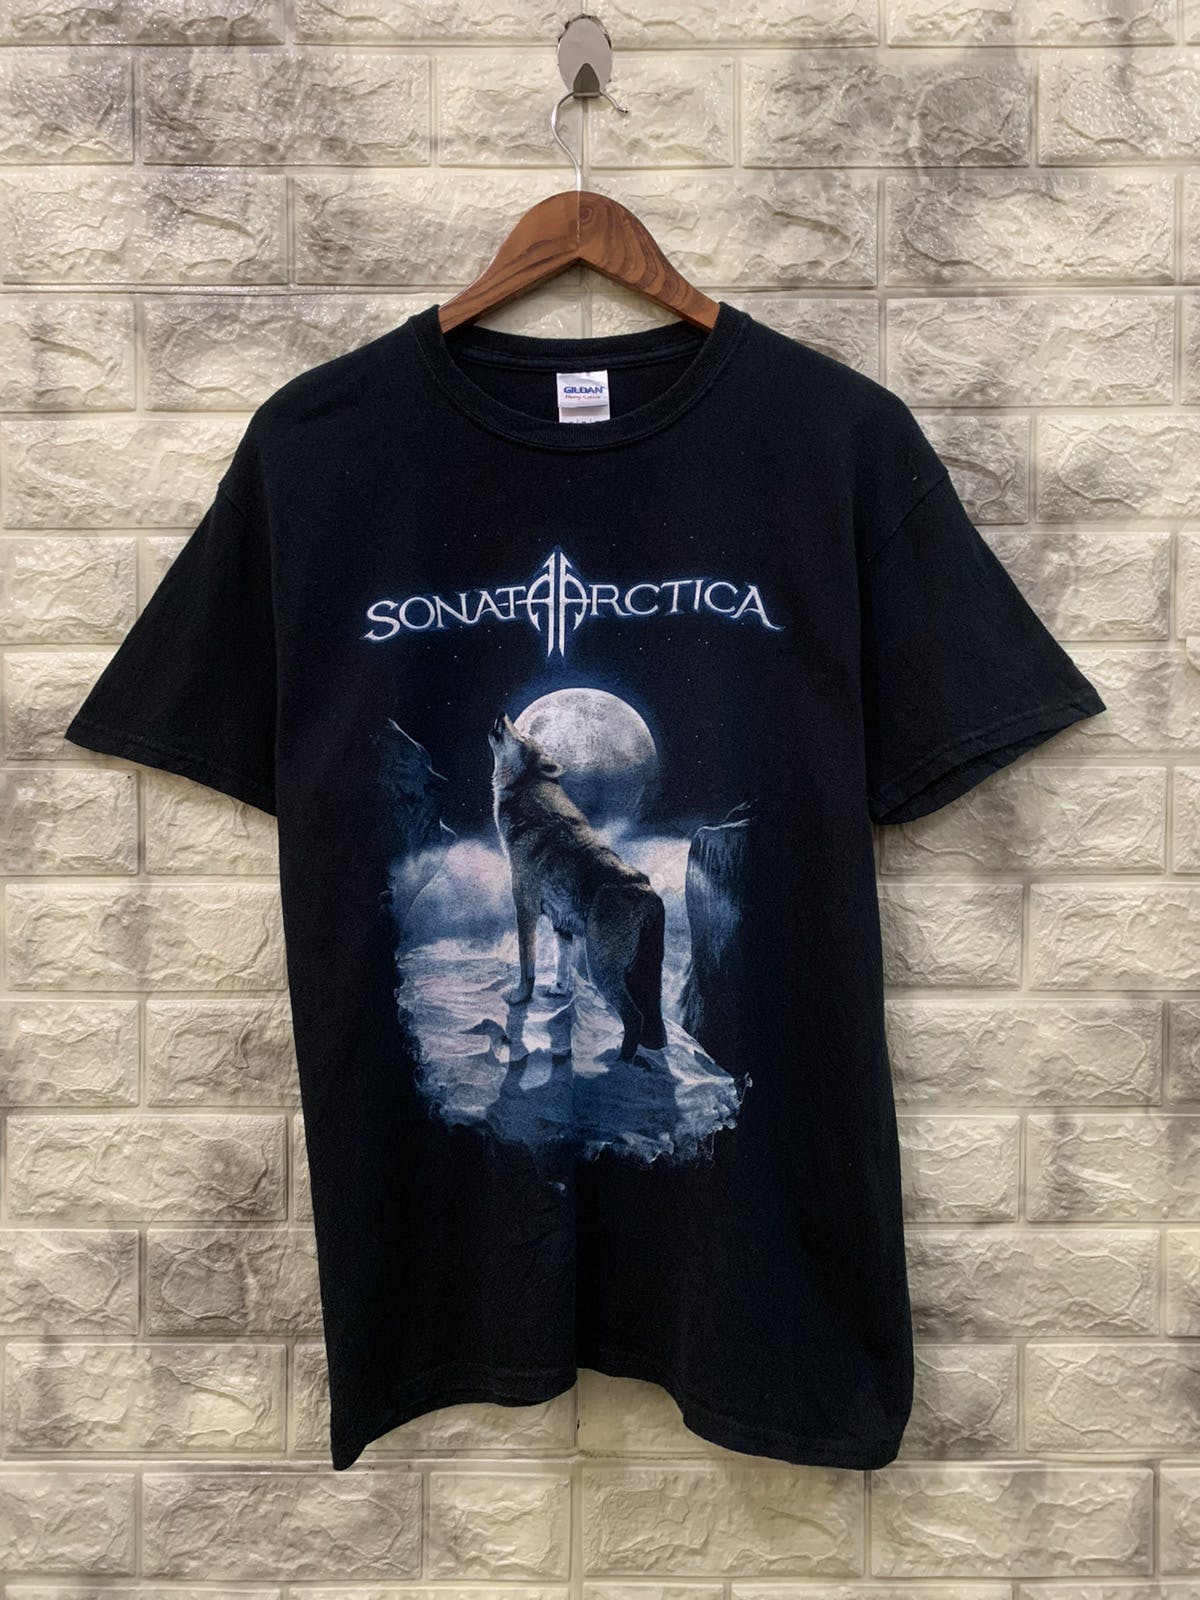 Vintage Sonata Arctica Metal Band T-Shirt - 1